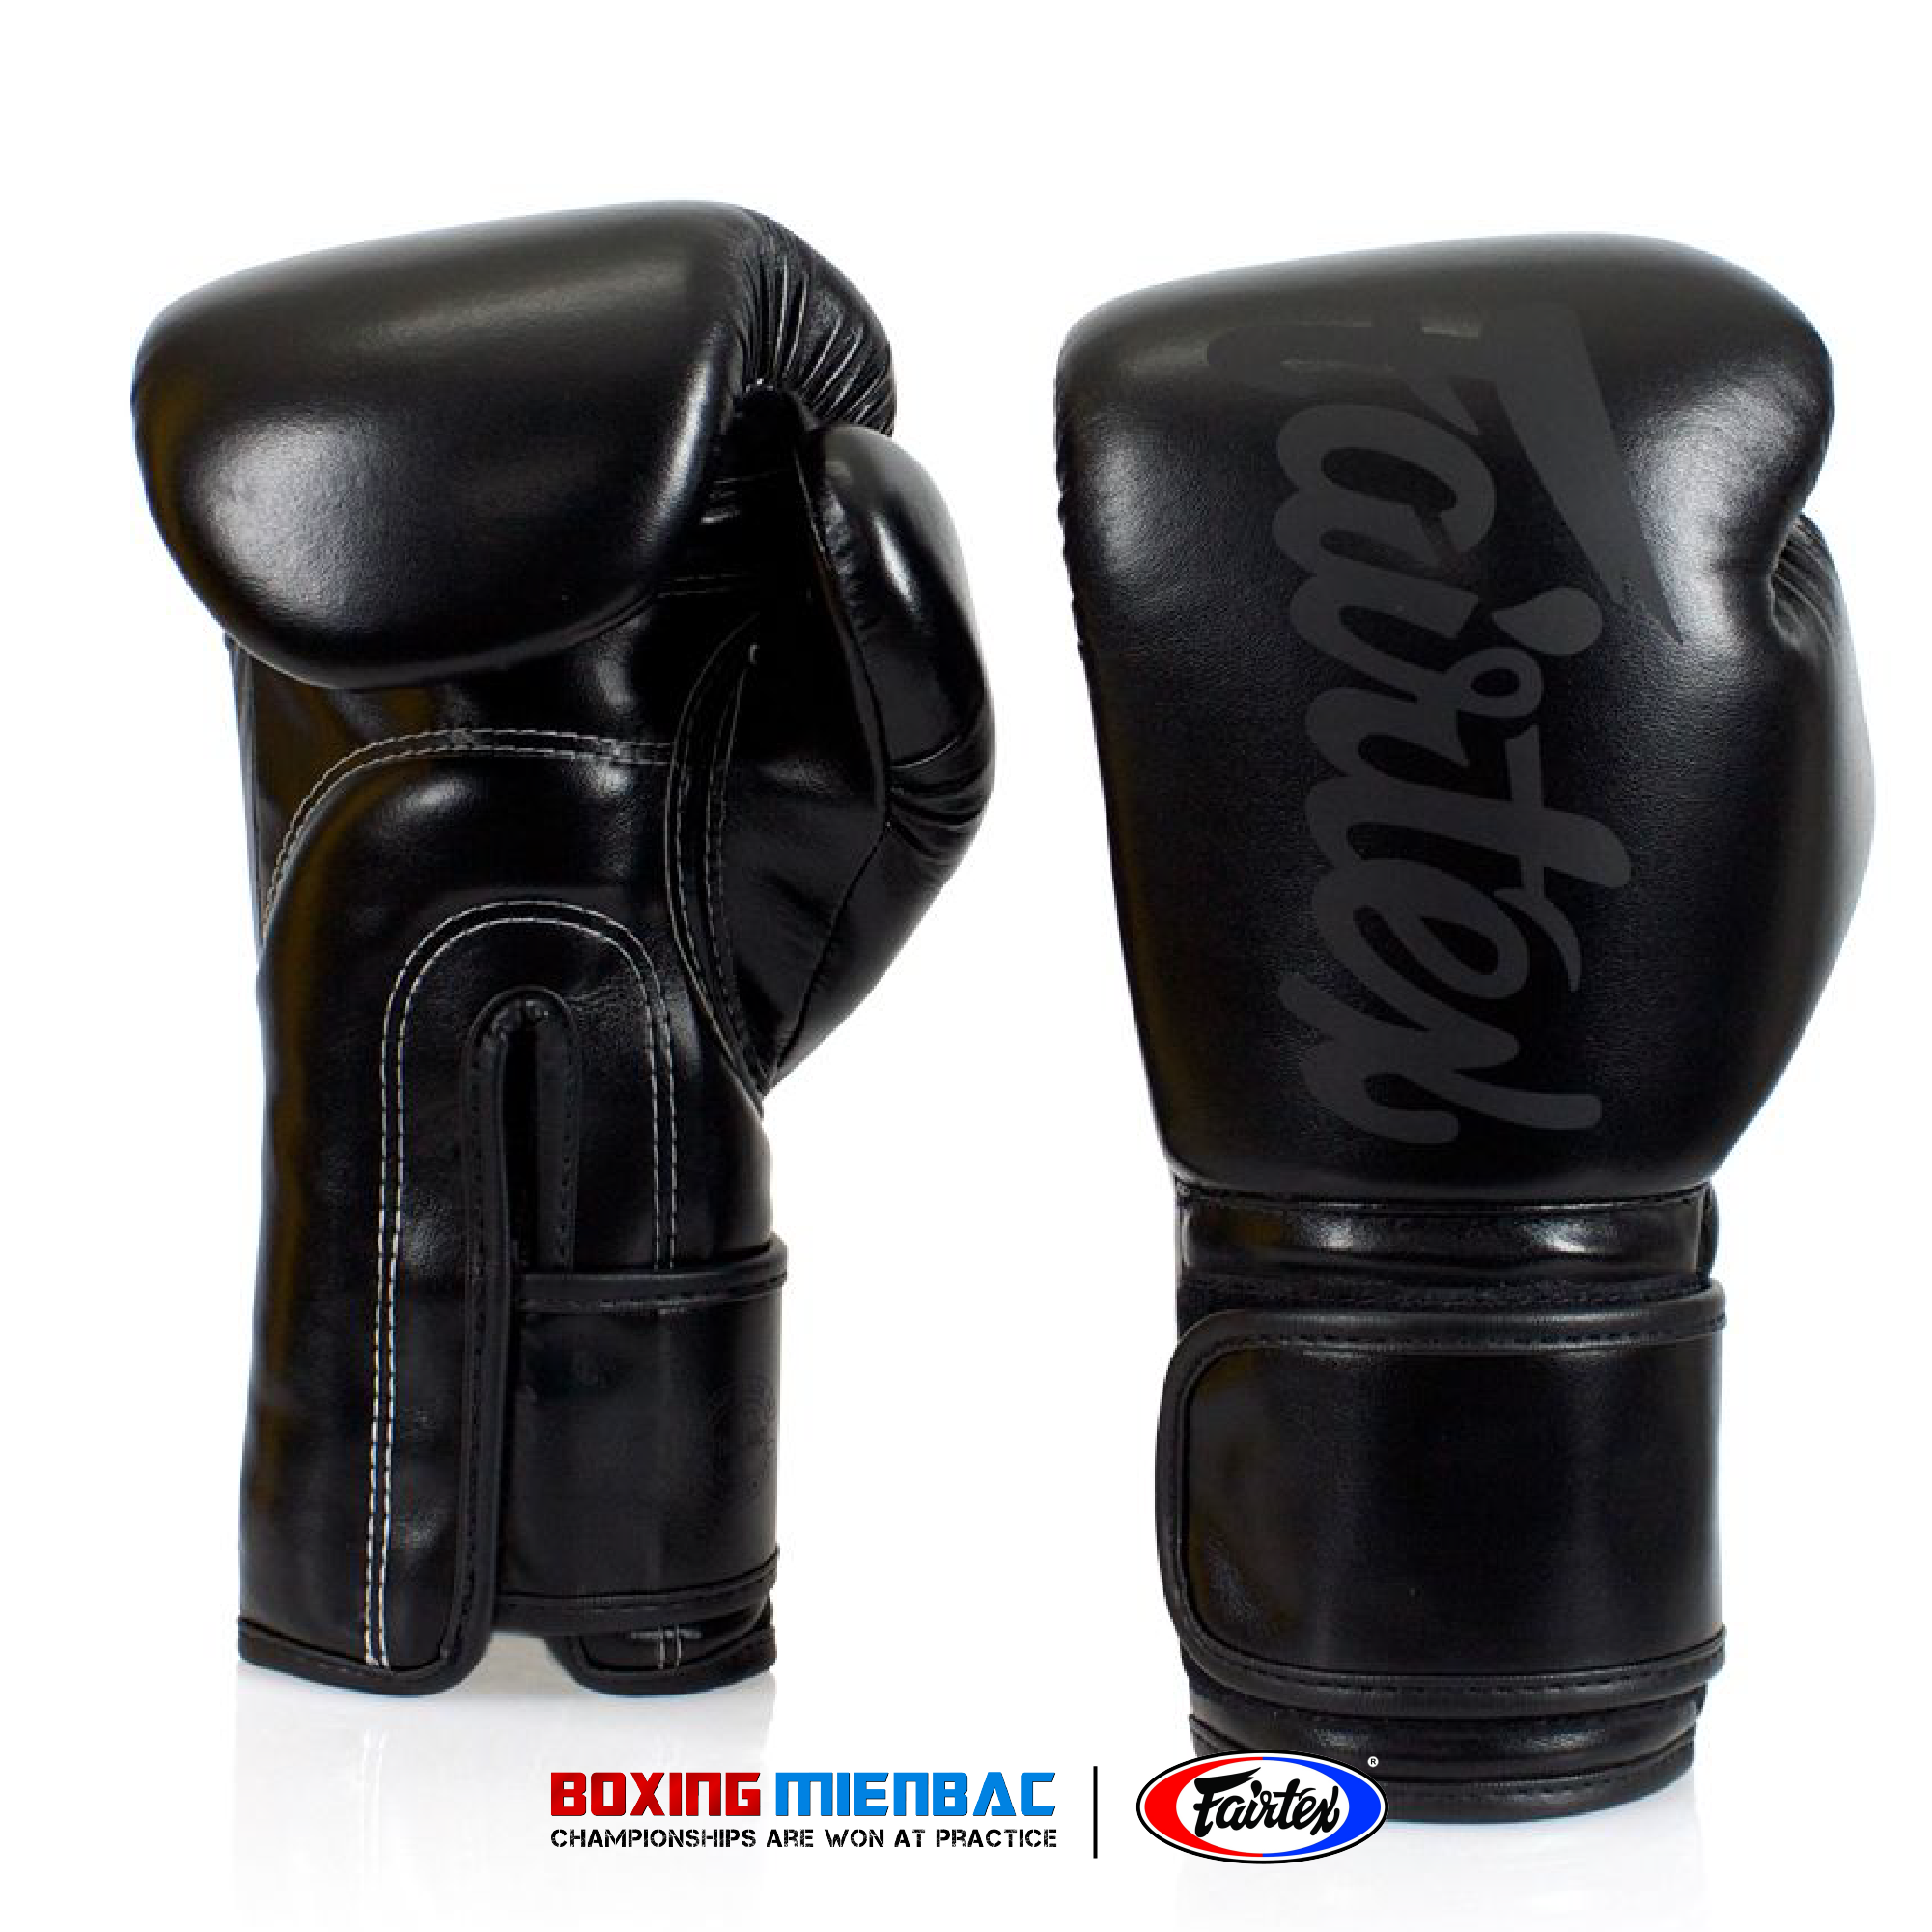 Găng Tay Boxing/ Muay Fairtex BGV14 Microfiber Leather – Đen, Đỏ, Đen Viền Đỏ